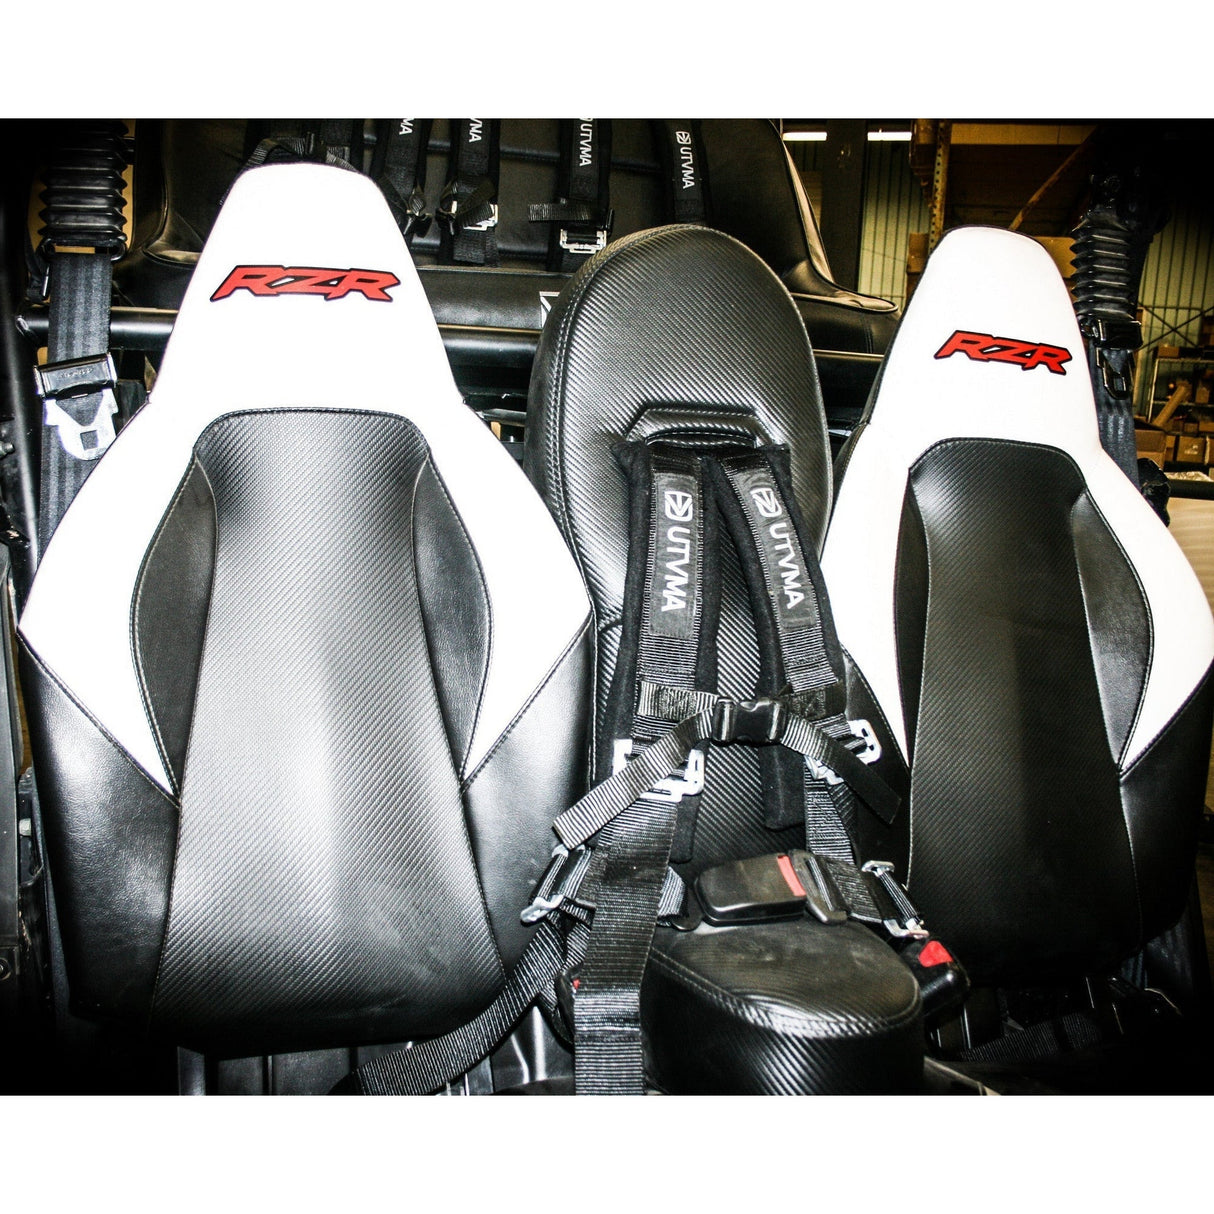 Polaris RZR 570 (2012-2016) Bump Seat with Harness